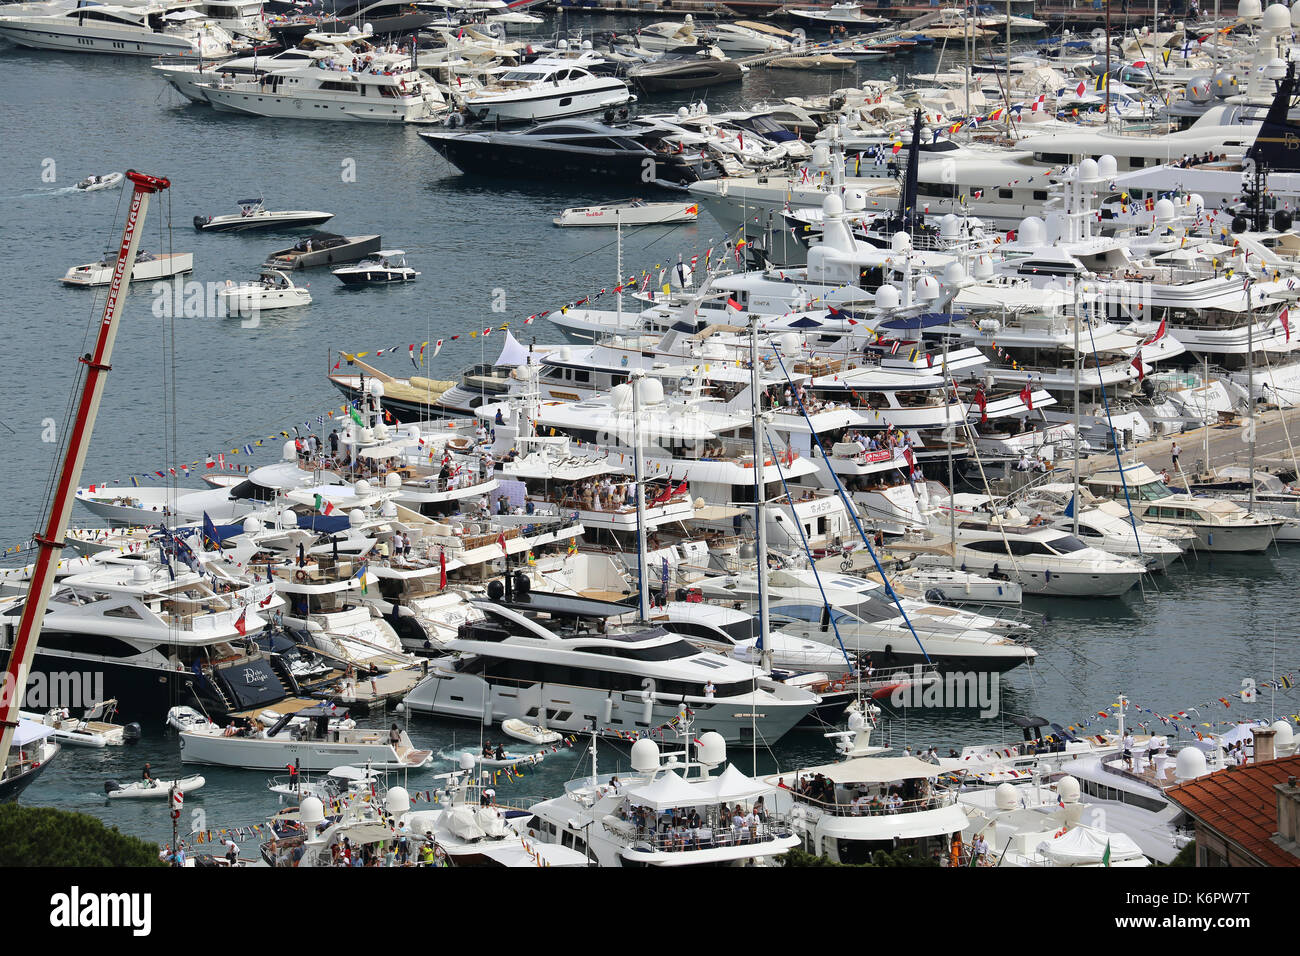 La Condamine, Monaco - May 28, 2016: Luxury Yachts are Parked in the Port Hercule for the Monaco Formula 1 Grand Prix 2016 Stock Photo